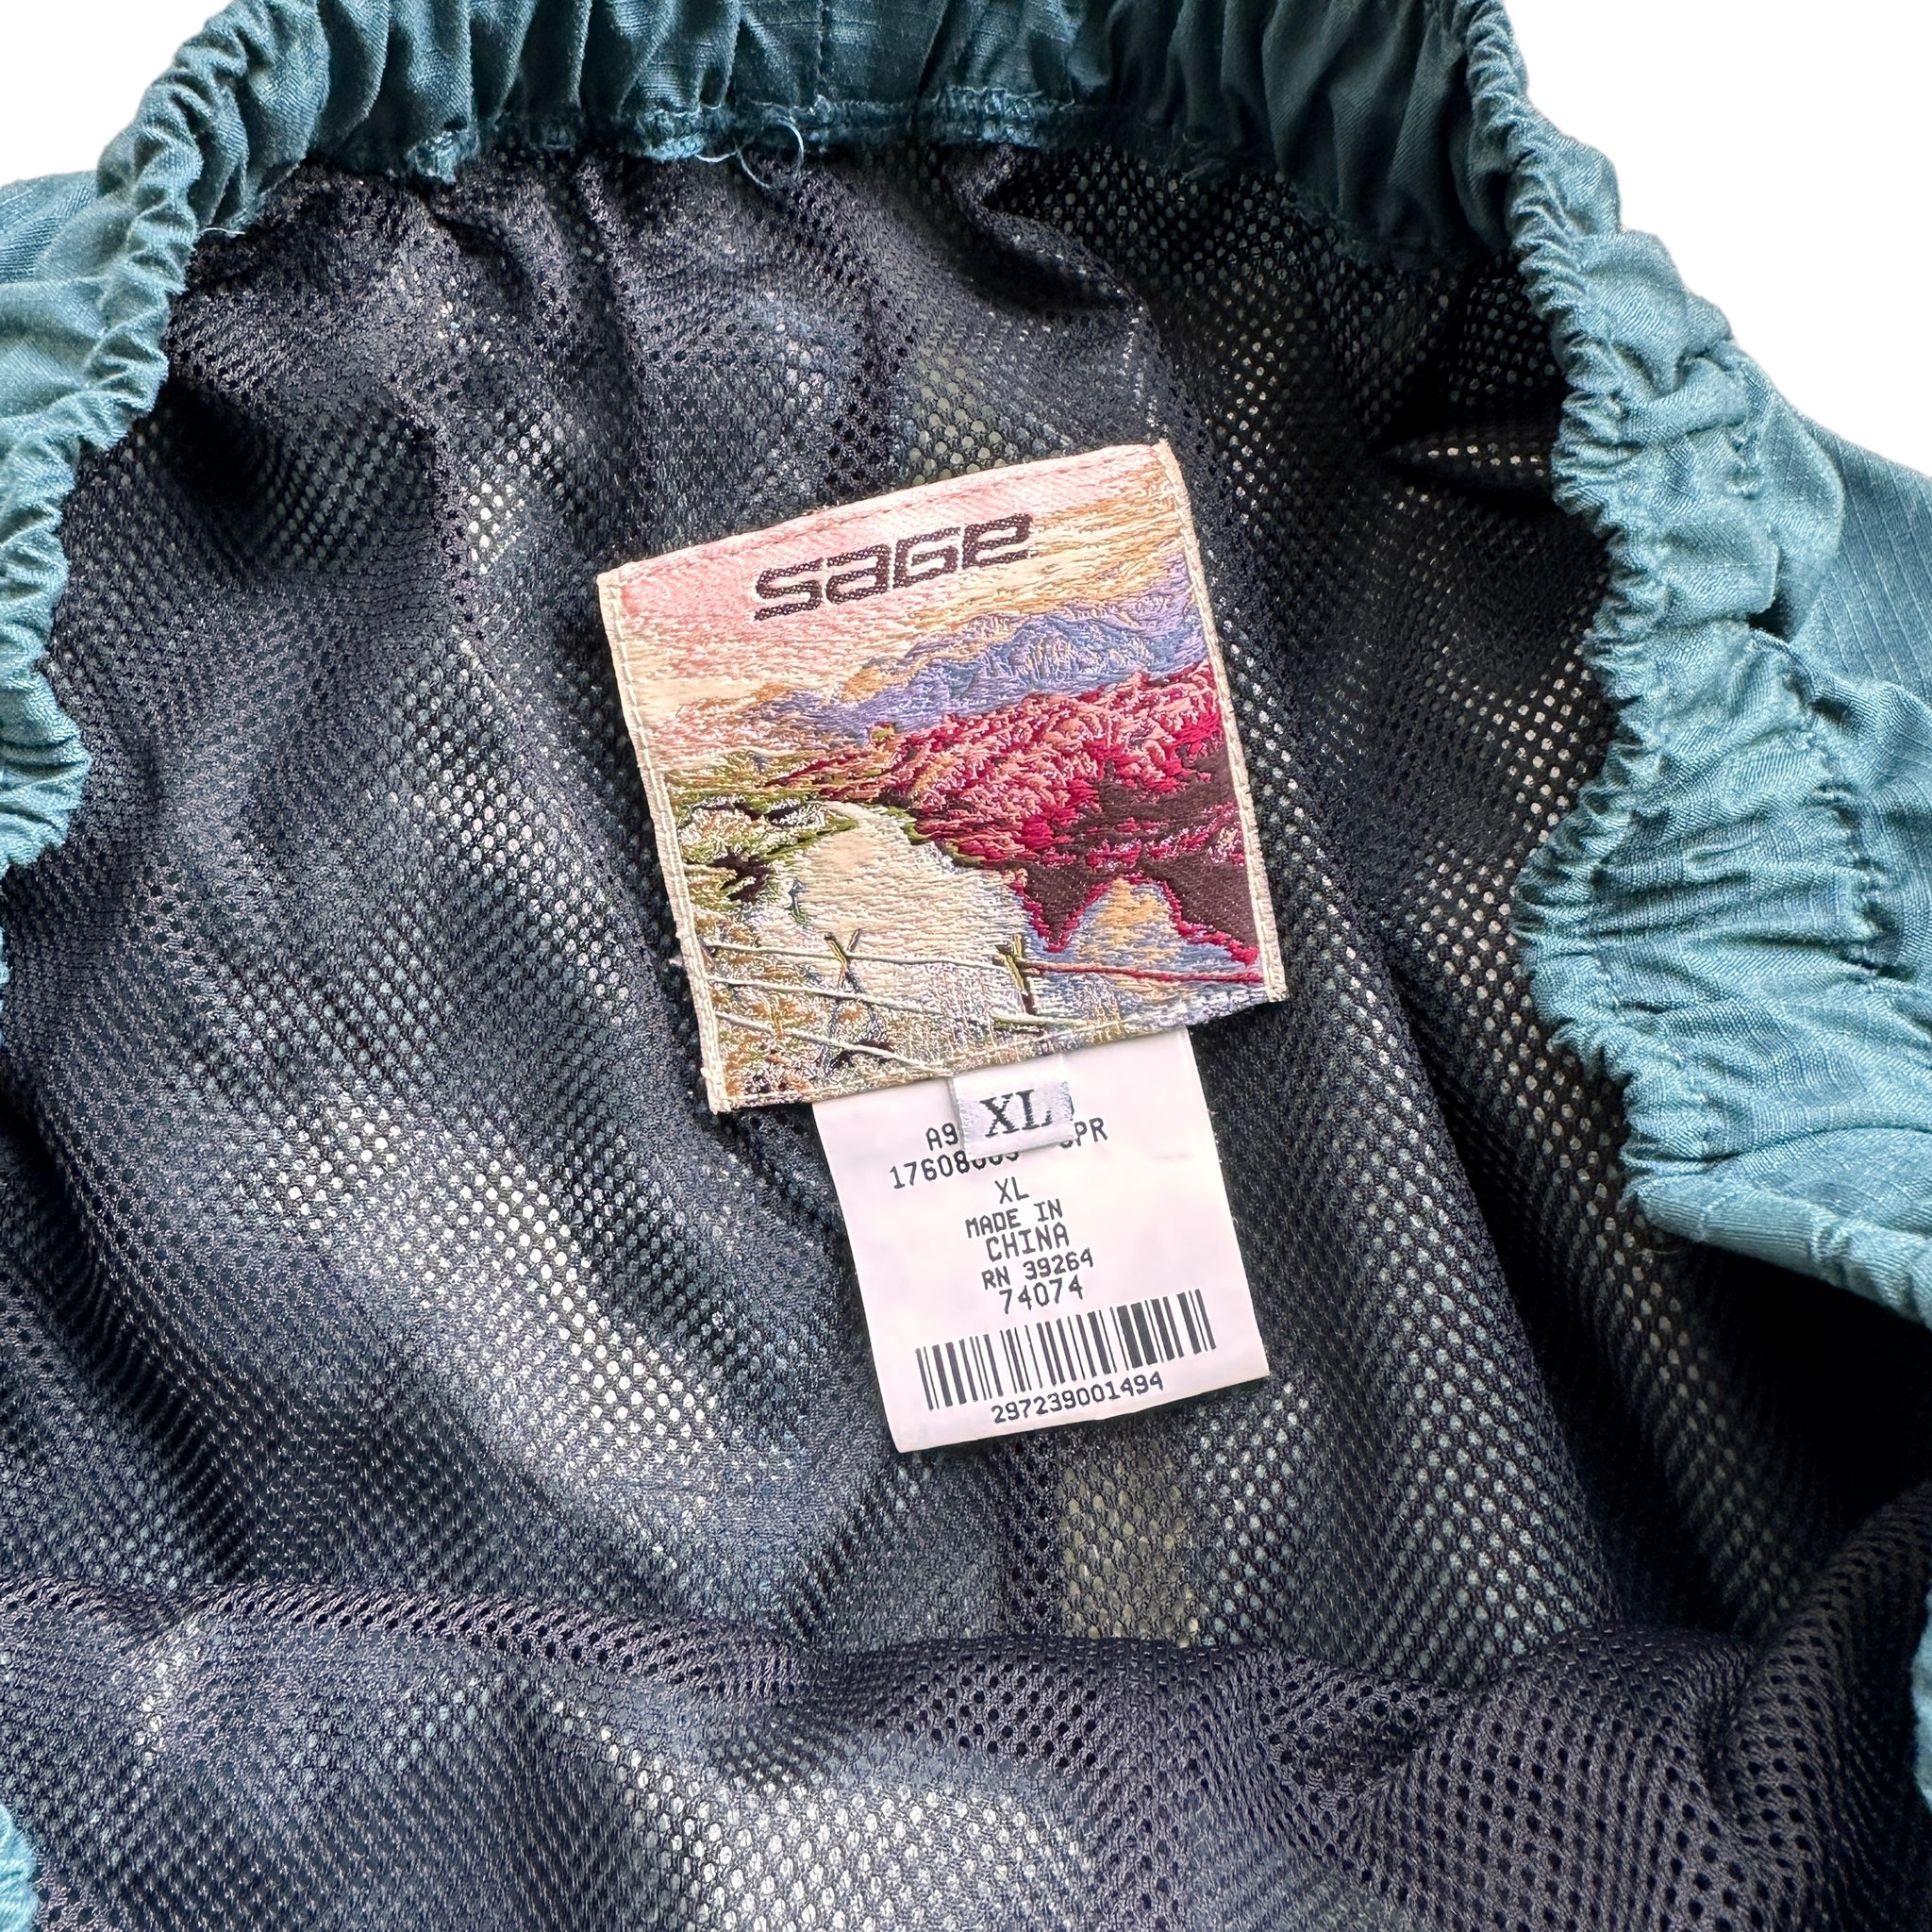 90s Sage fishing rain pants XL